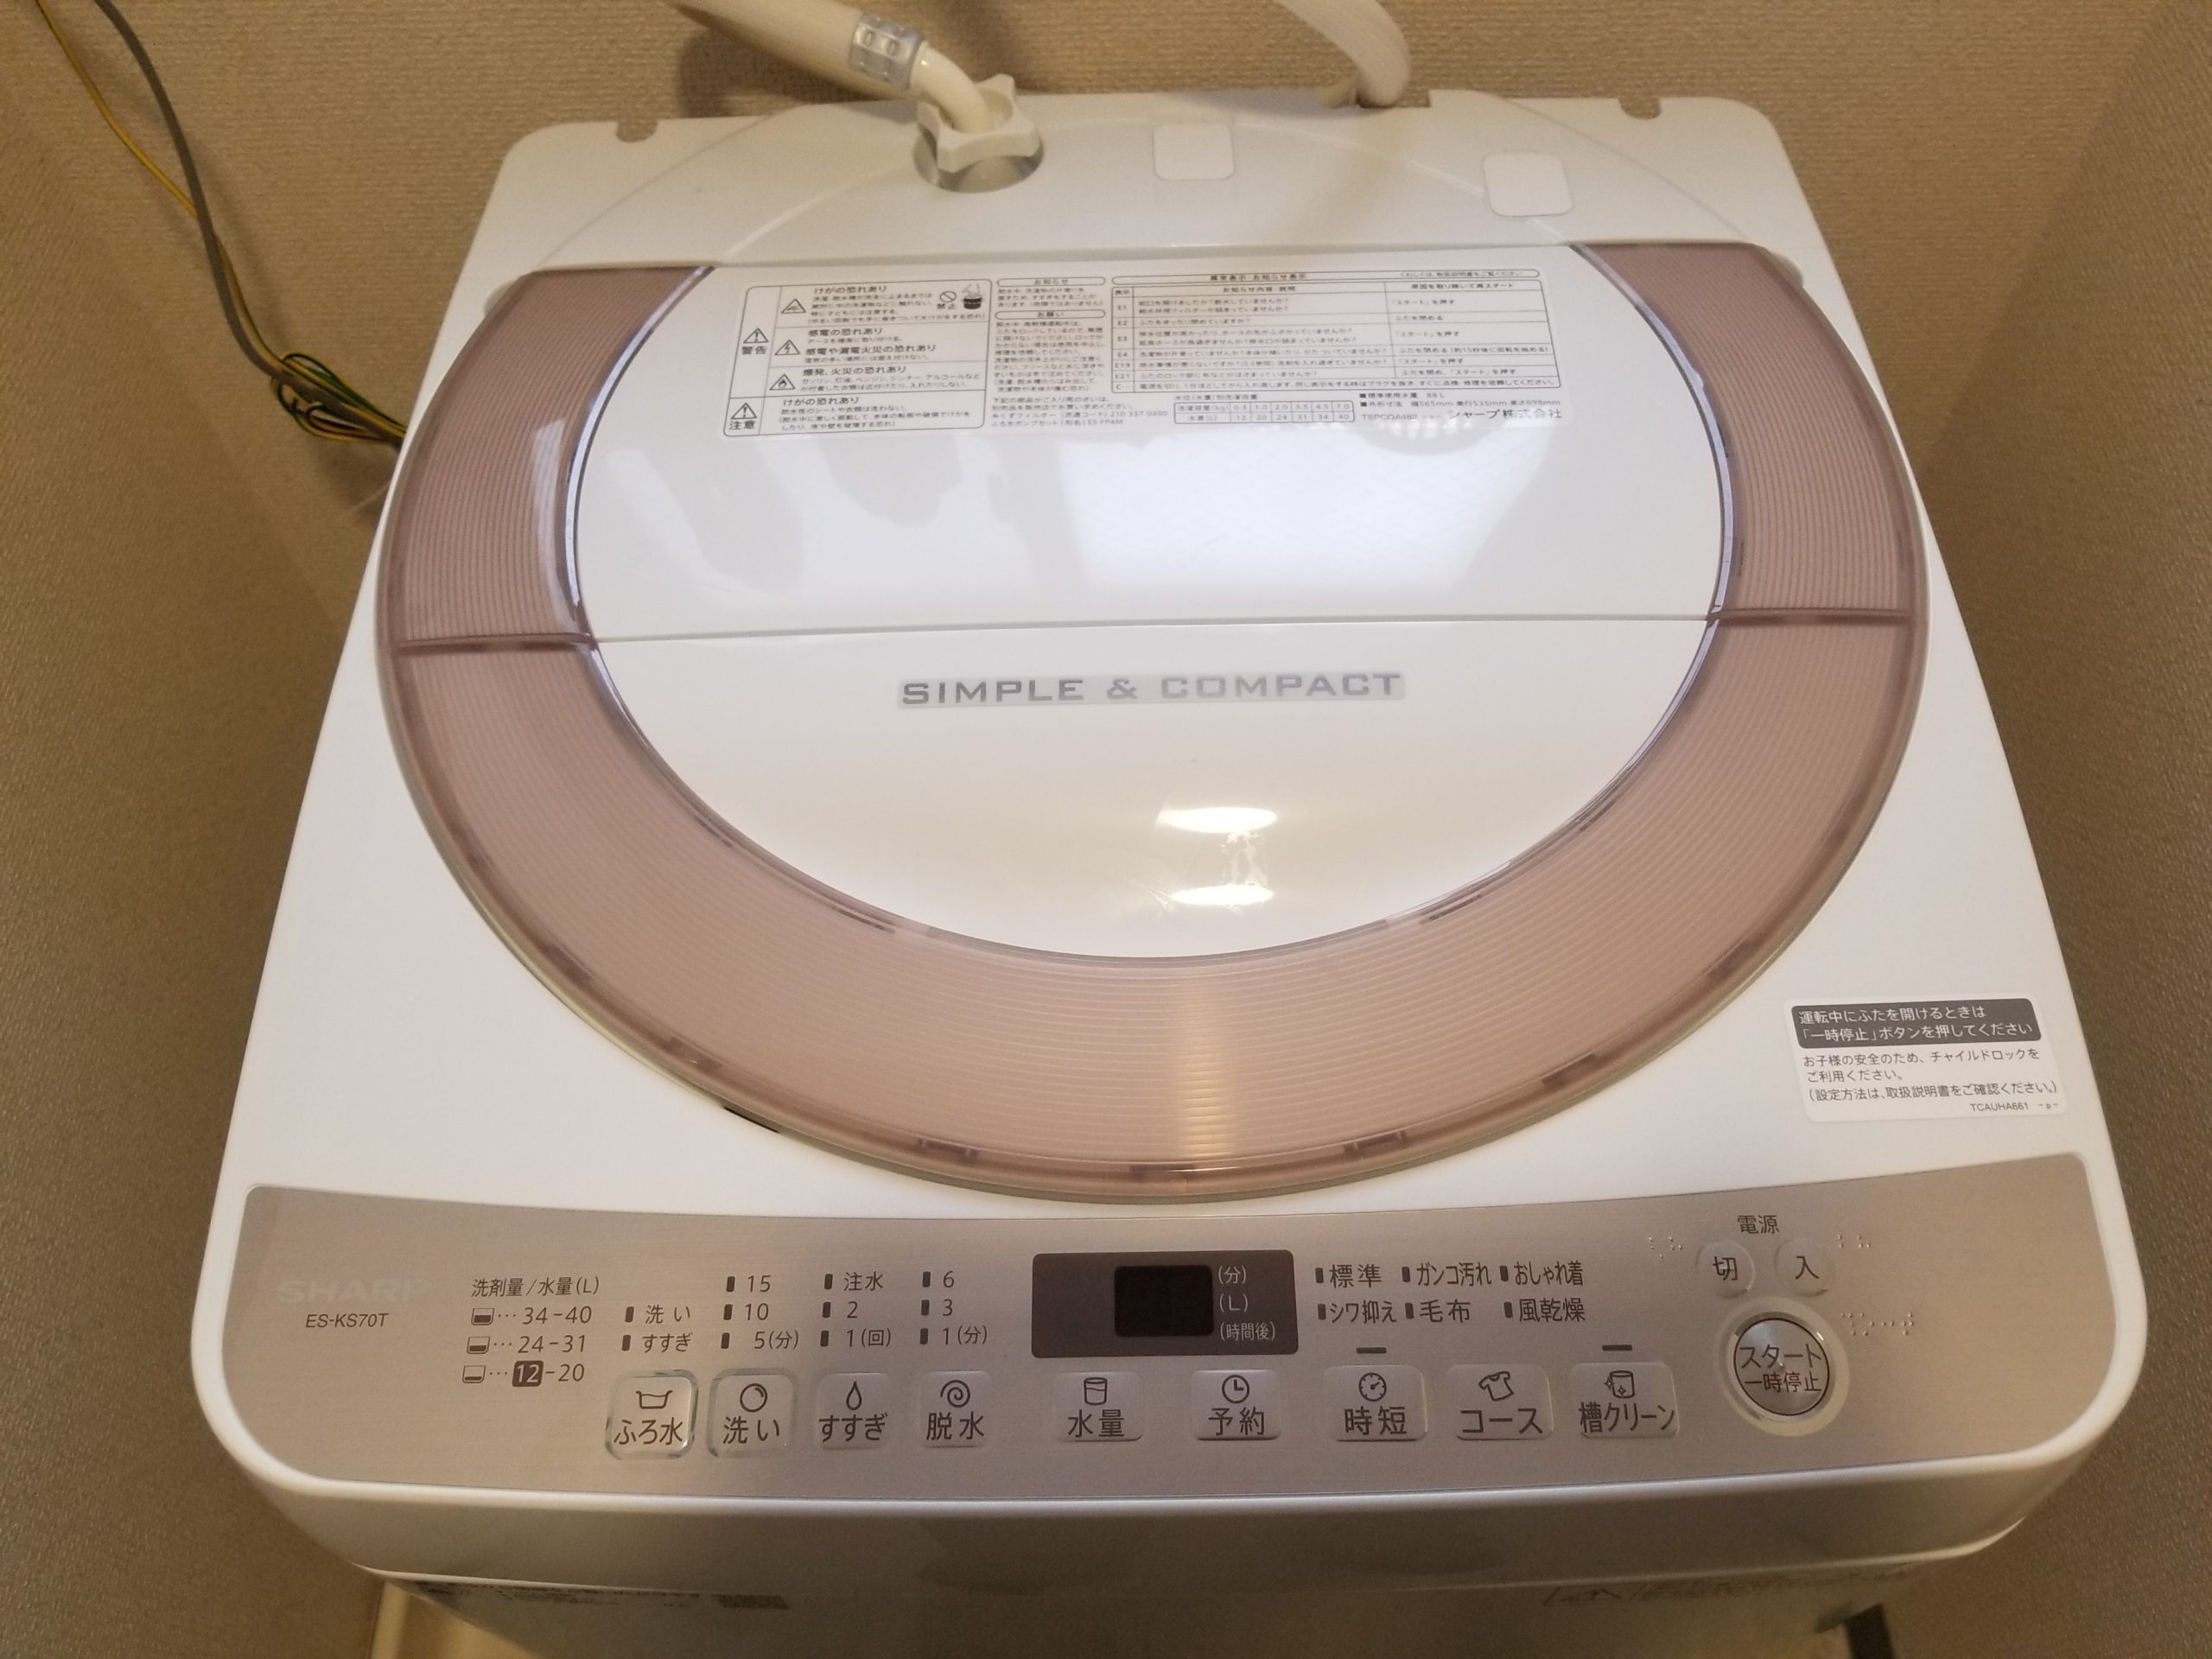 洗濯機 SHARP ES-KS70T SIMPLE & COMPACT - 洗濯機